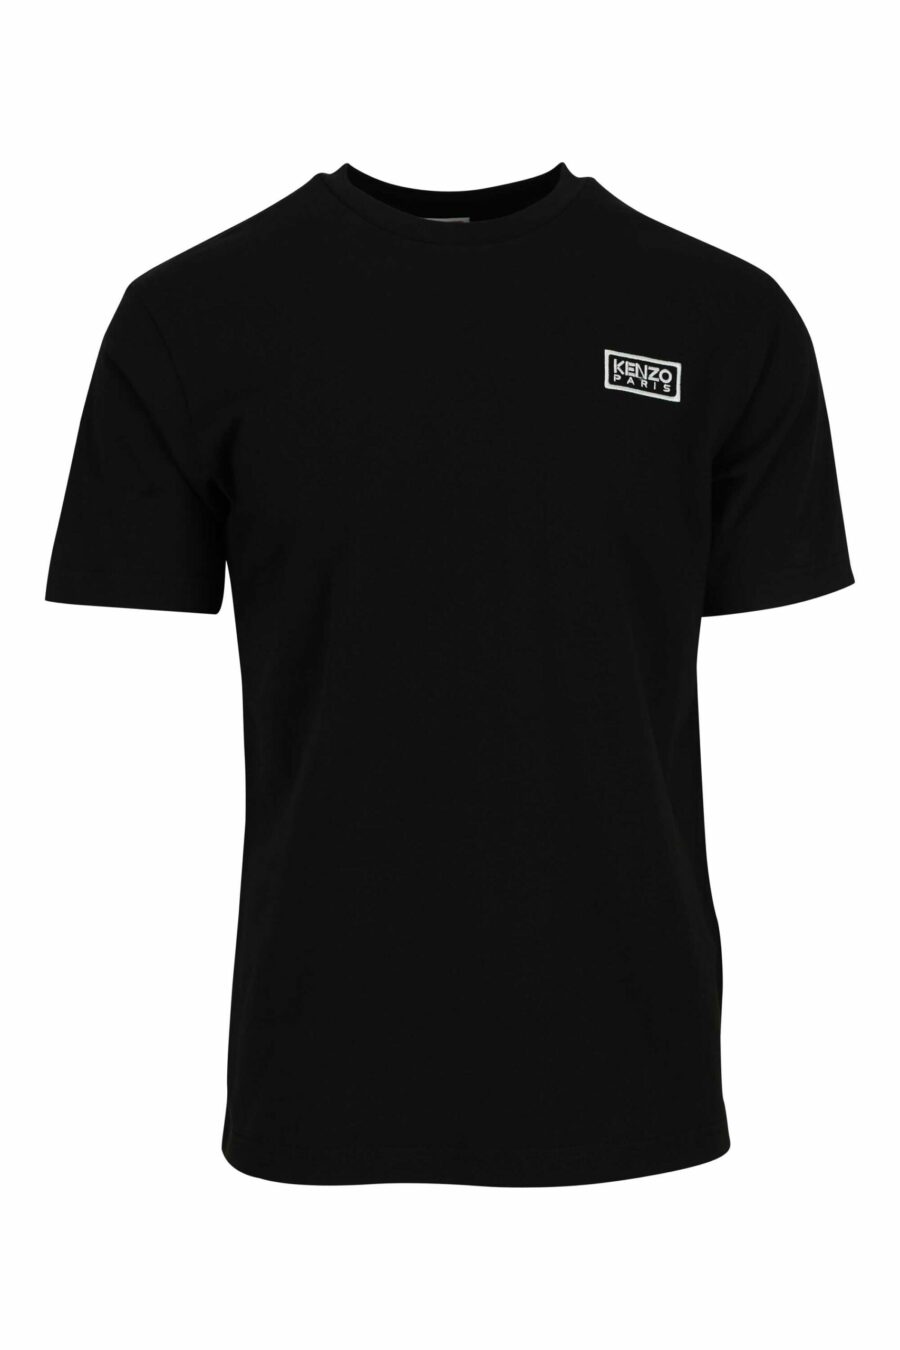 Schwarzes T-Shirt mit Minilogue "KP classic" - 3612230624443 skaliert